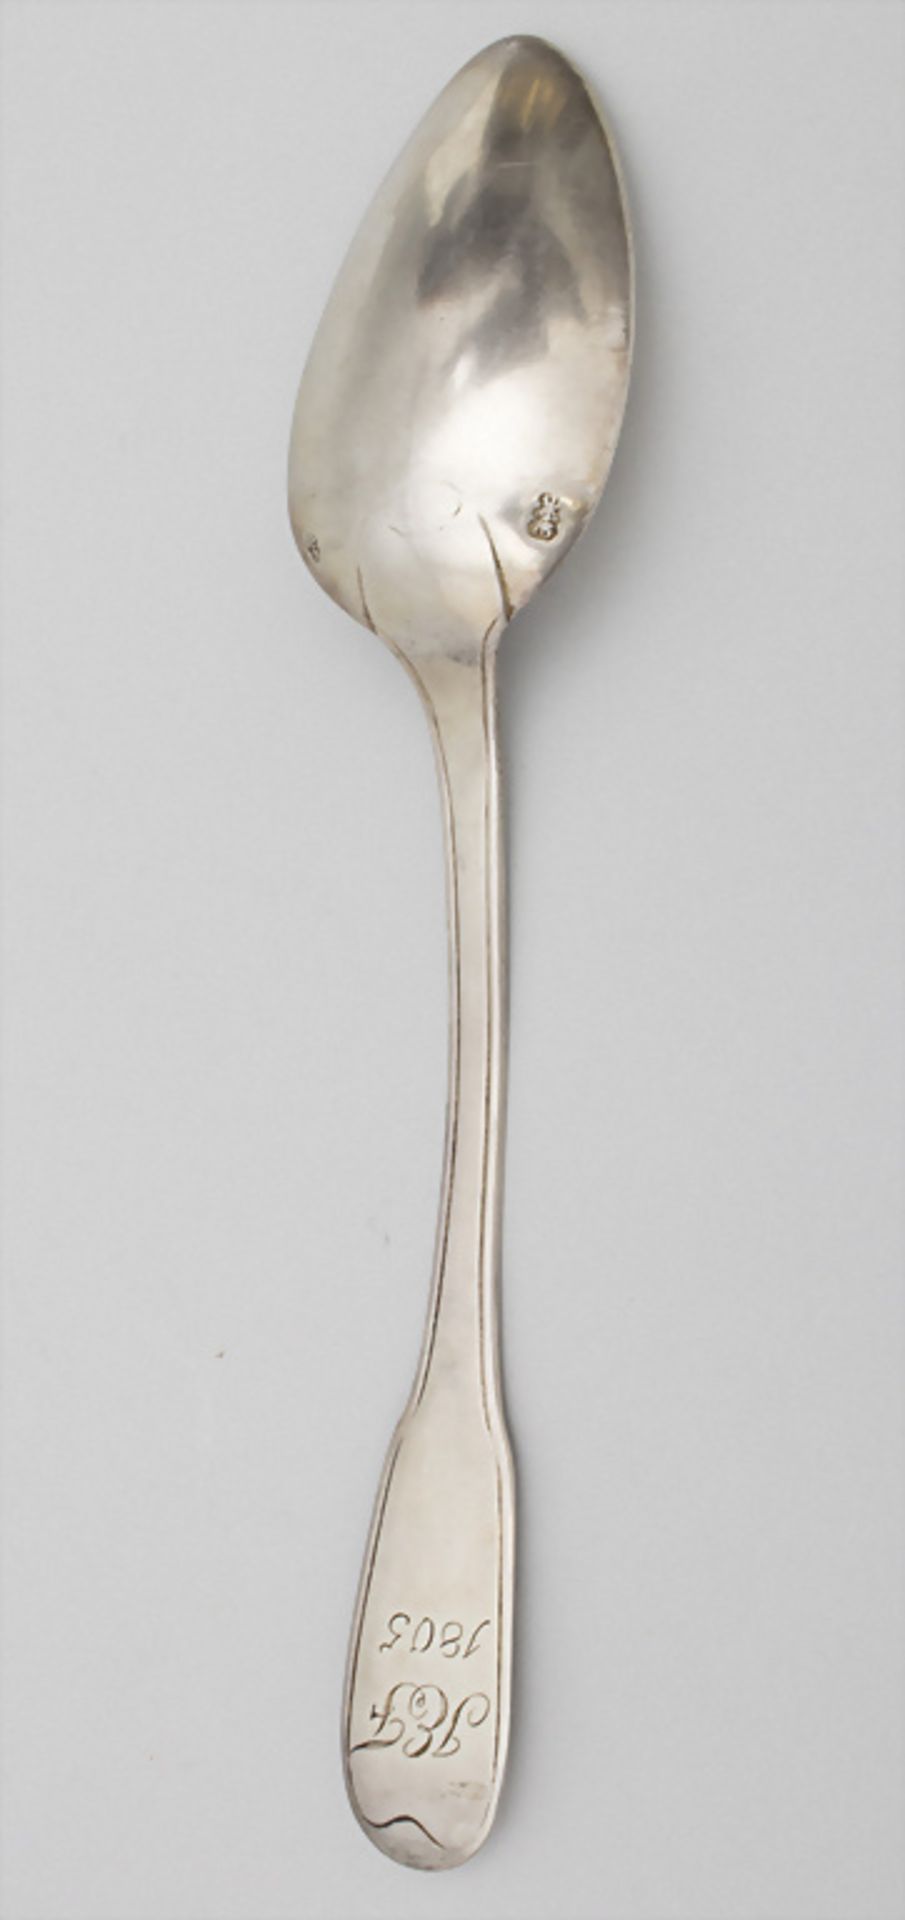 6 Löffel / 6 silver spoons, Johann Heinrich Philipp Schott, Frankfurt, 1805 - Image 4 of 8